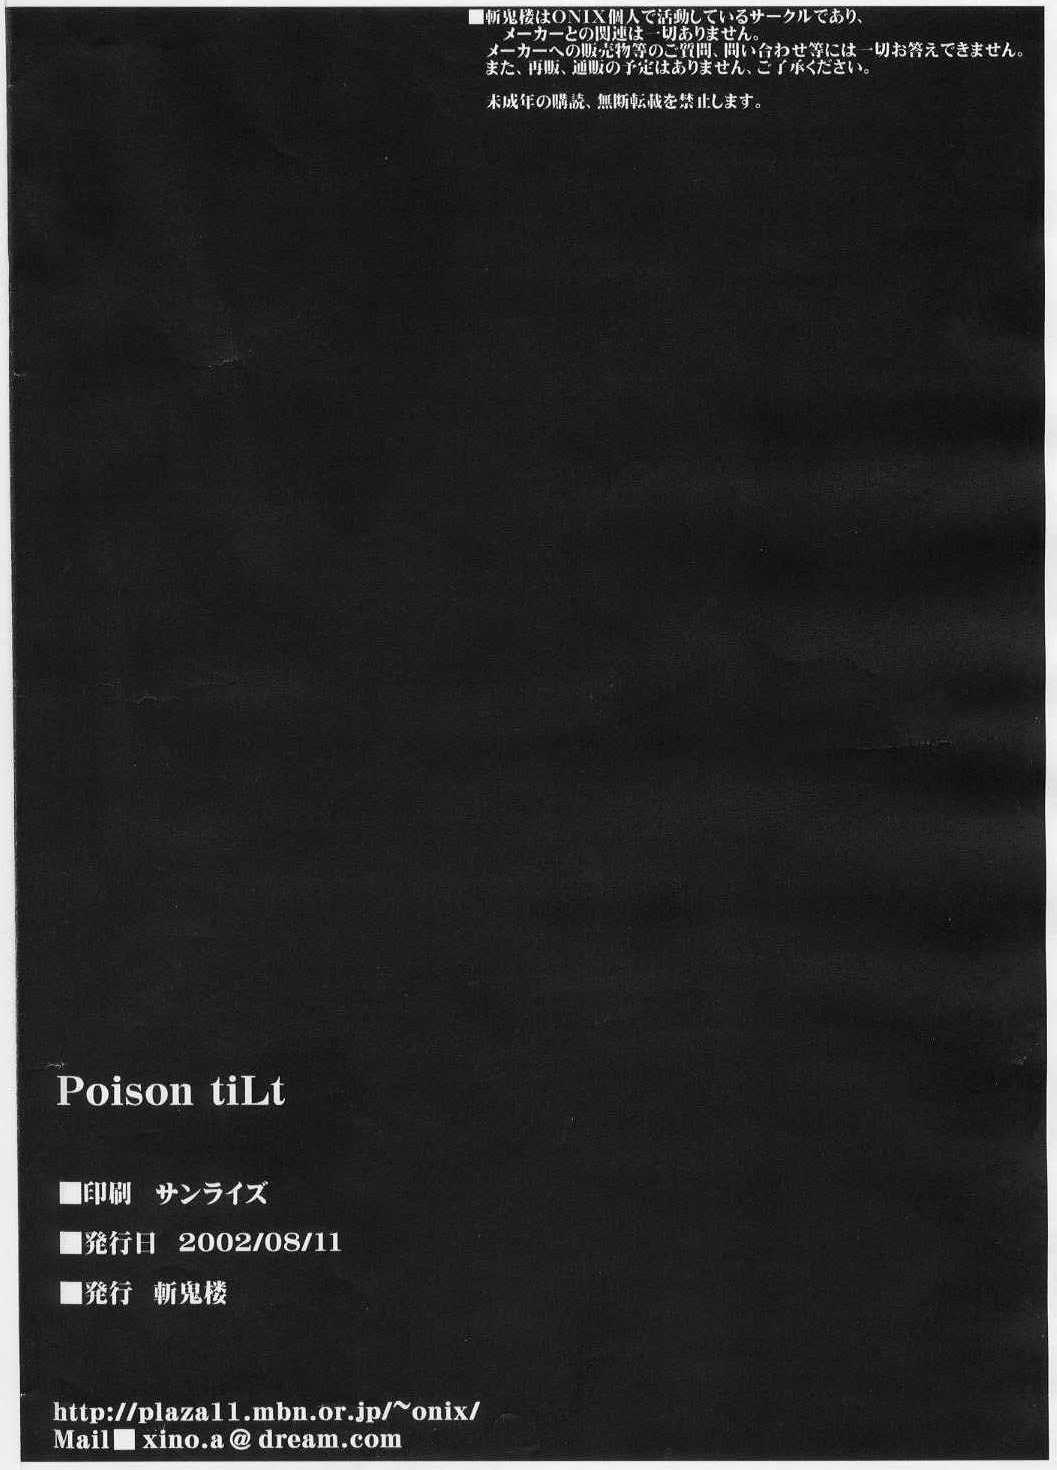 [斬鬼楼] Poison tiLt Version 1.00 